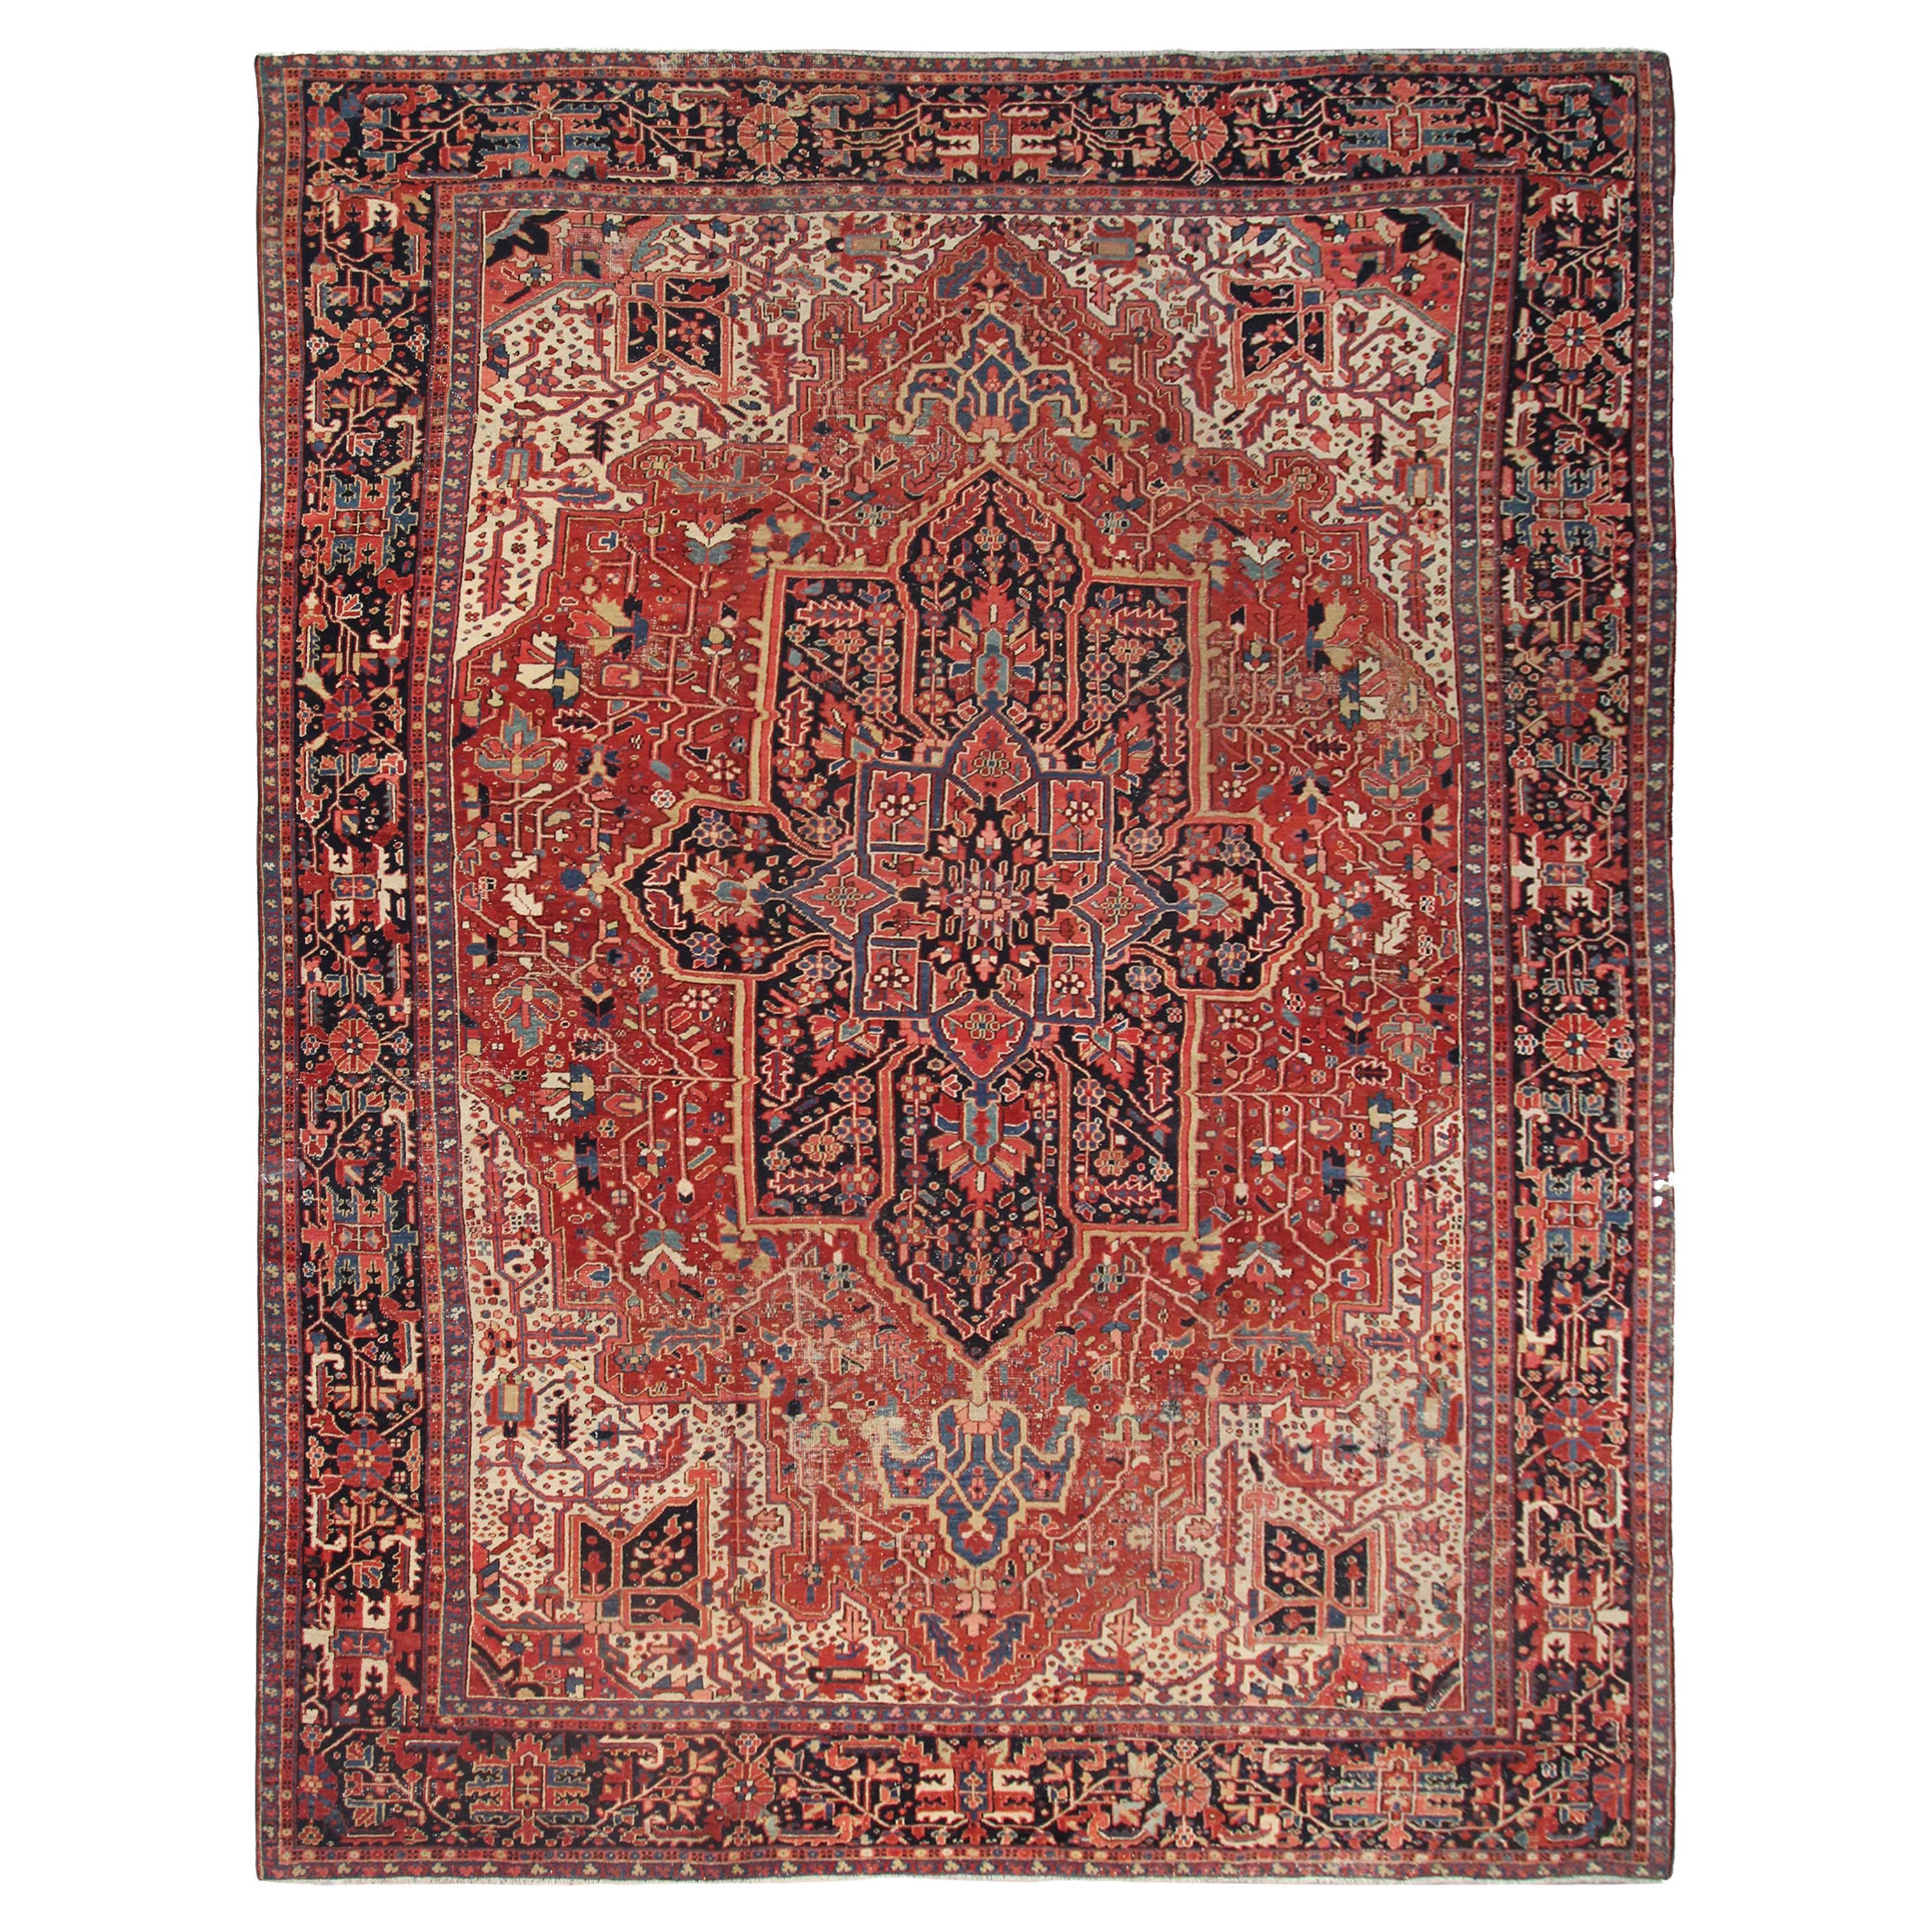 Grand tapis persan ancien Heriz Serapi géométrique Heriz 11 x 14 330 cm x 427 cm